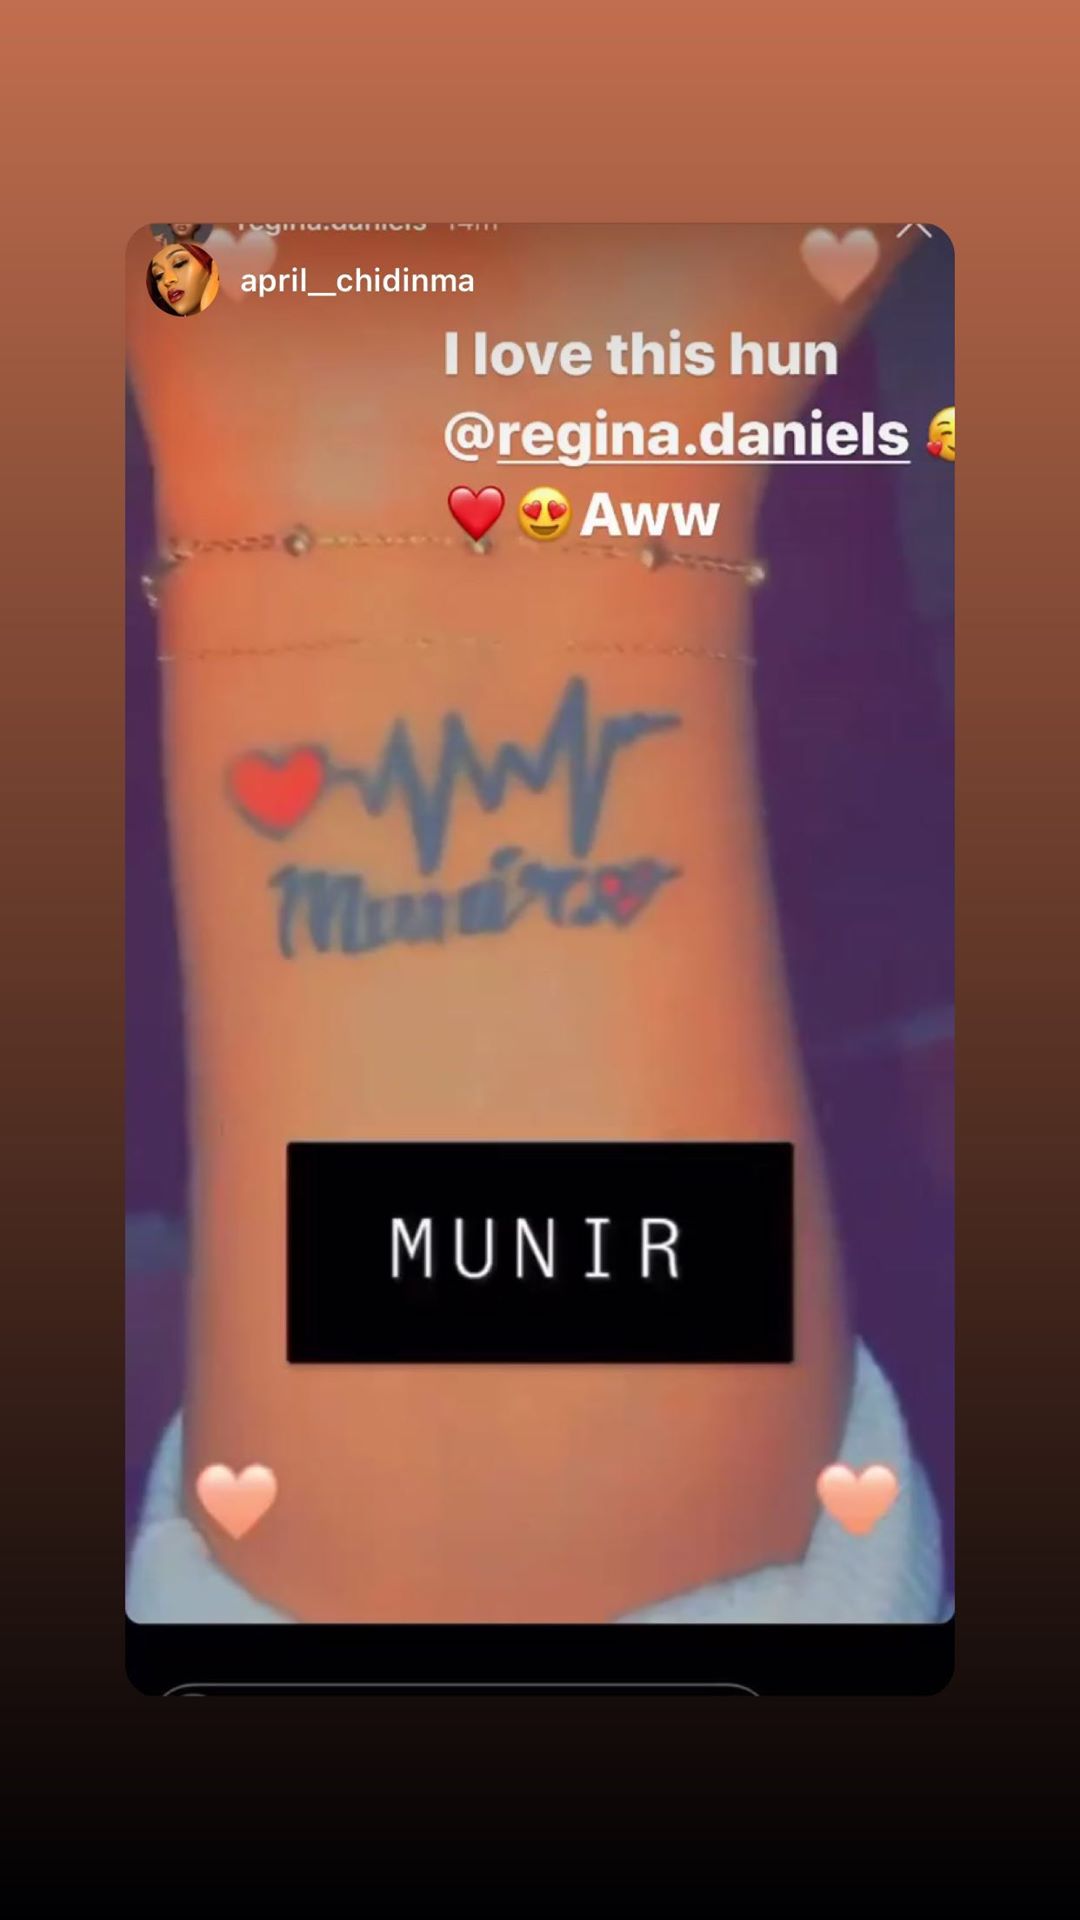 So Beautiful! Regina Daniels’ Tattoos Her Baby’s Name On Her Wrist - Photos+Video